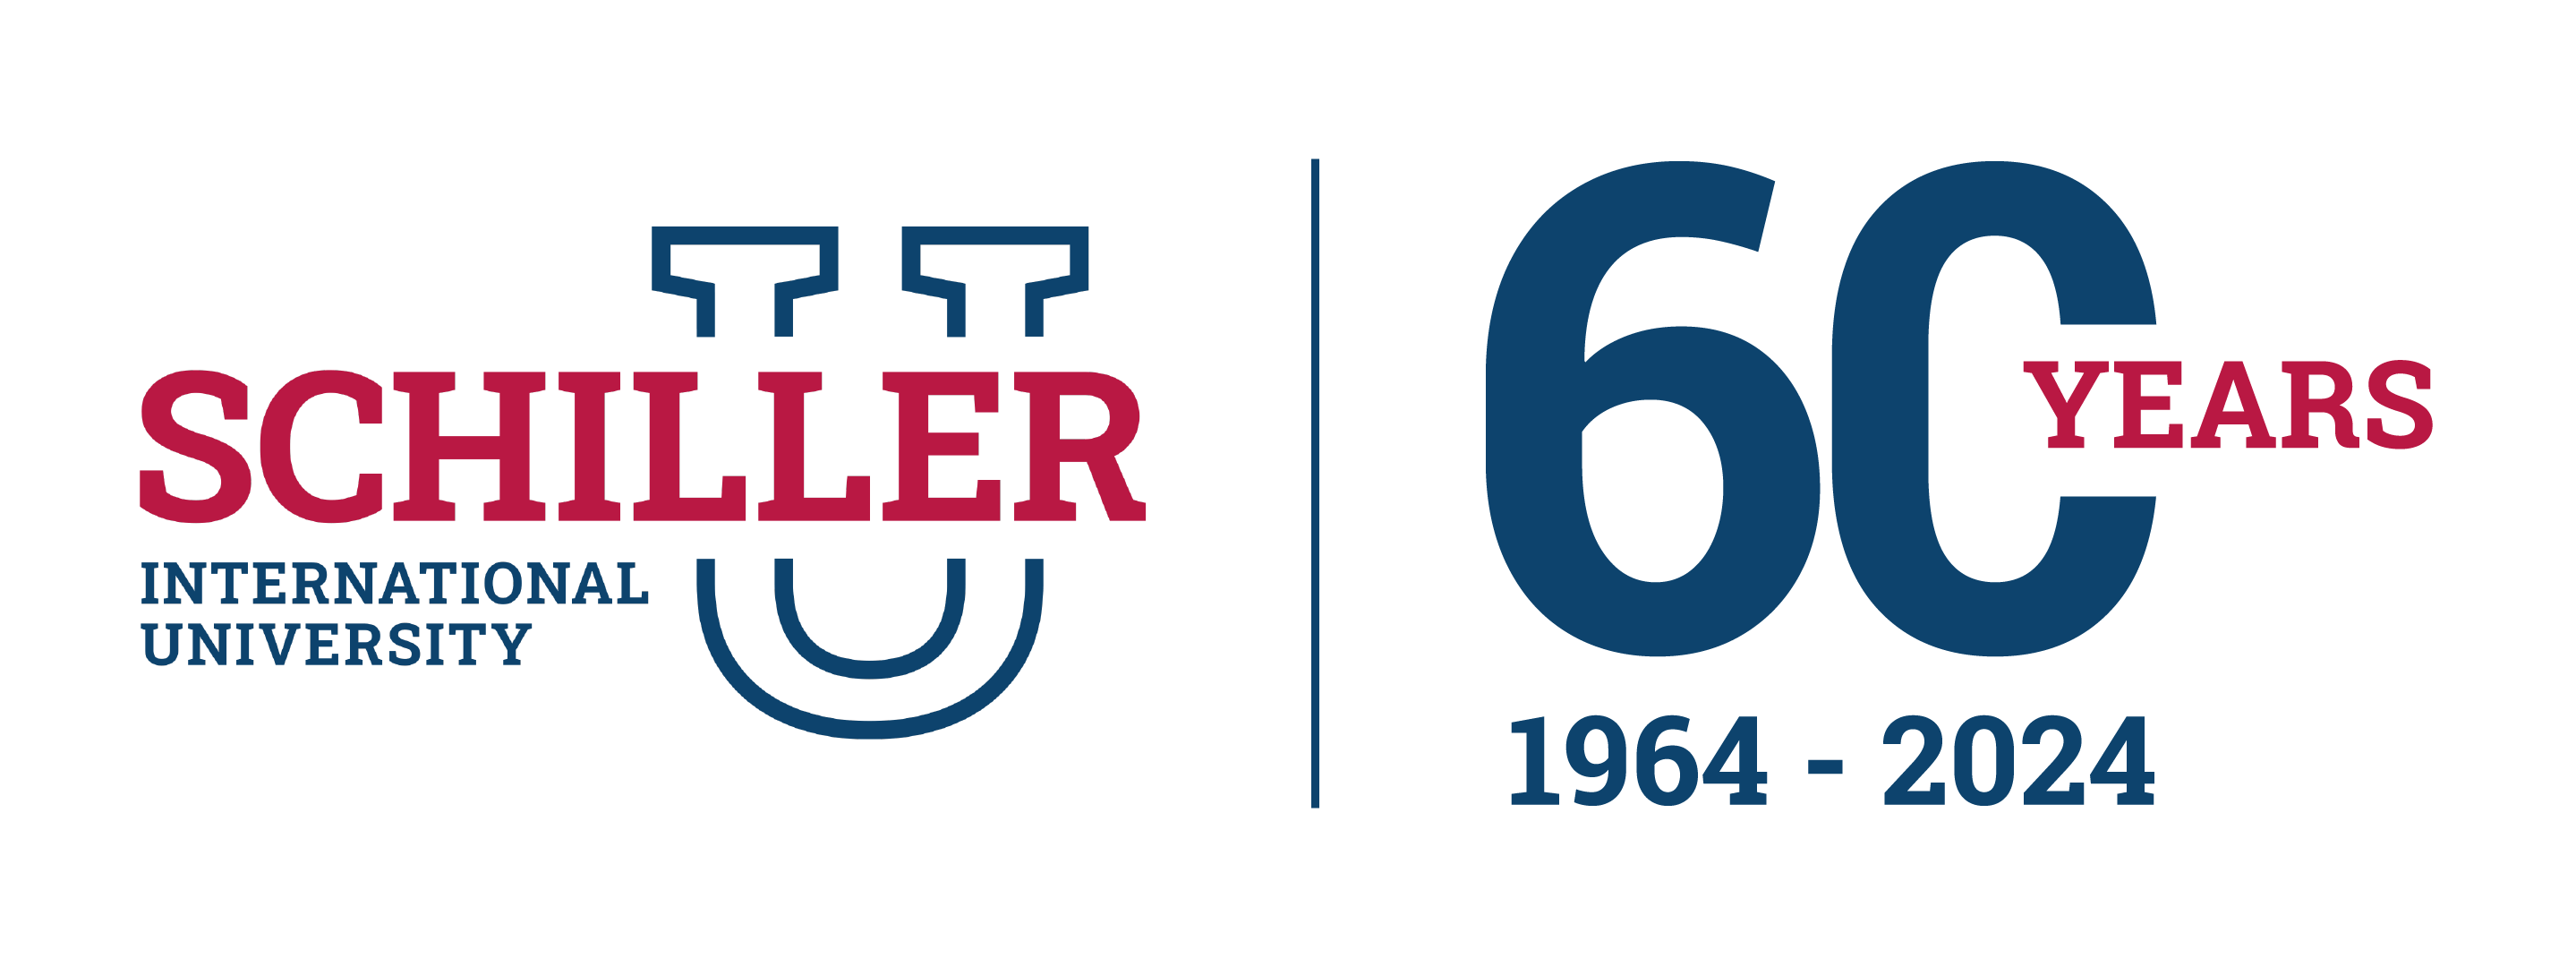 Schiller University 60 Years Commemorative Logo with Color Design